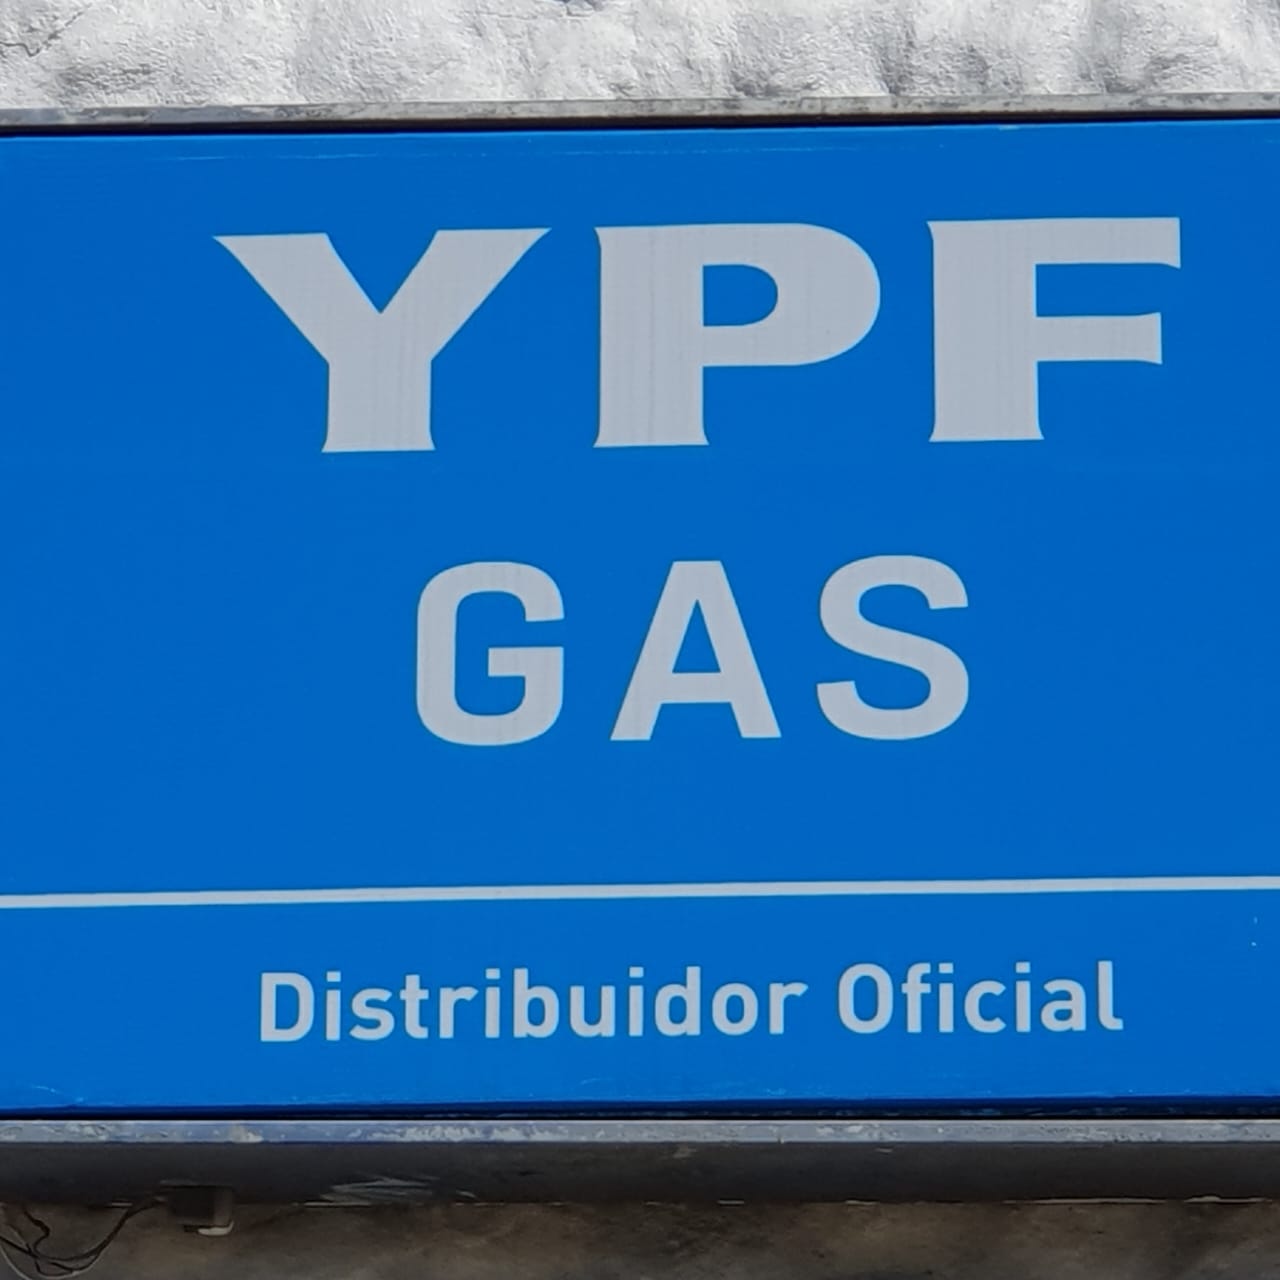 Elegí YPF Gas 100% Propano